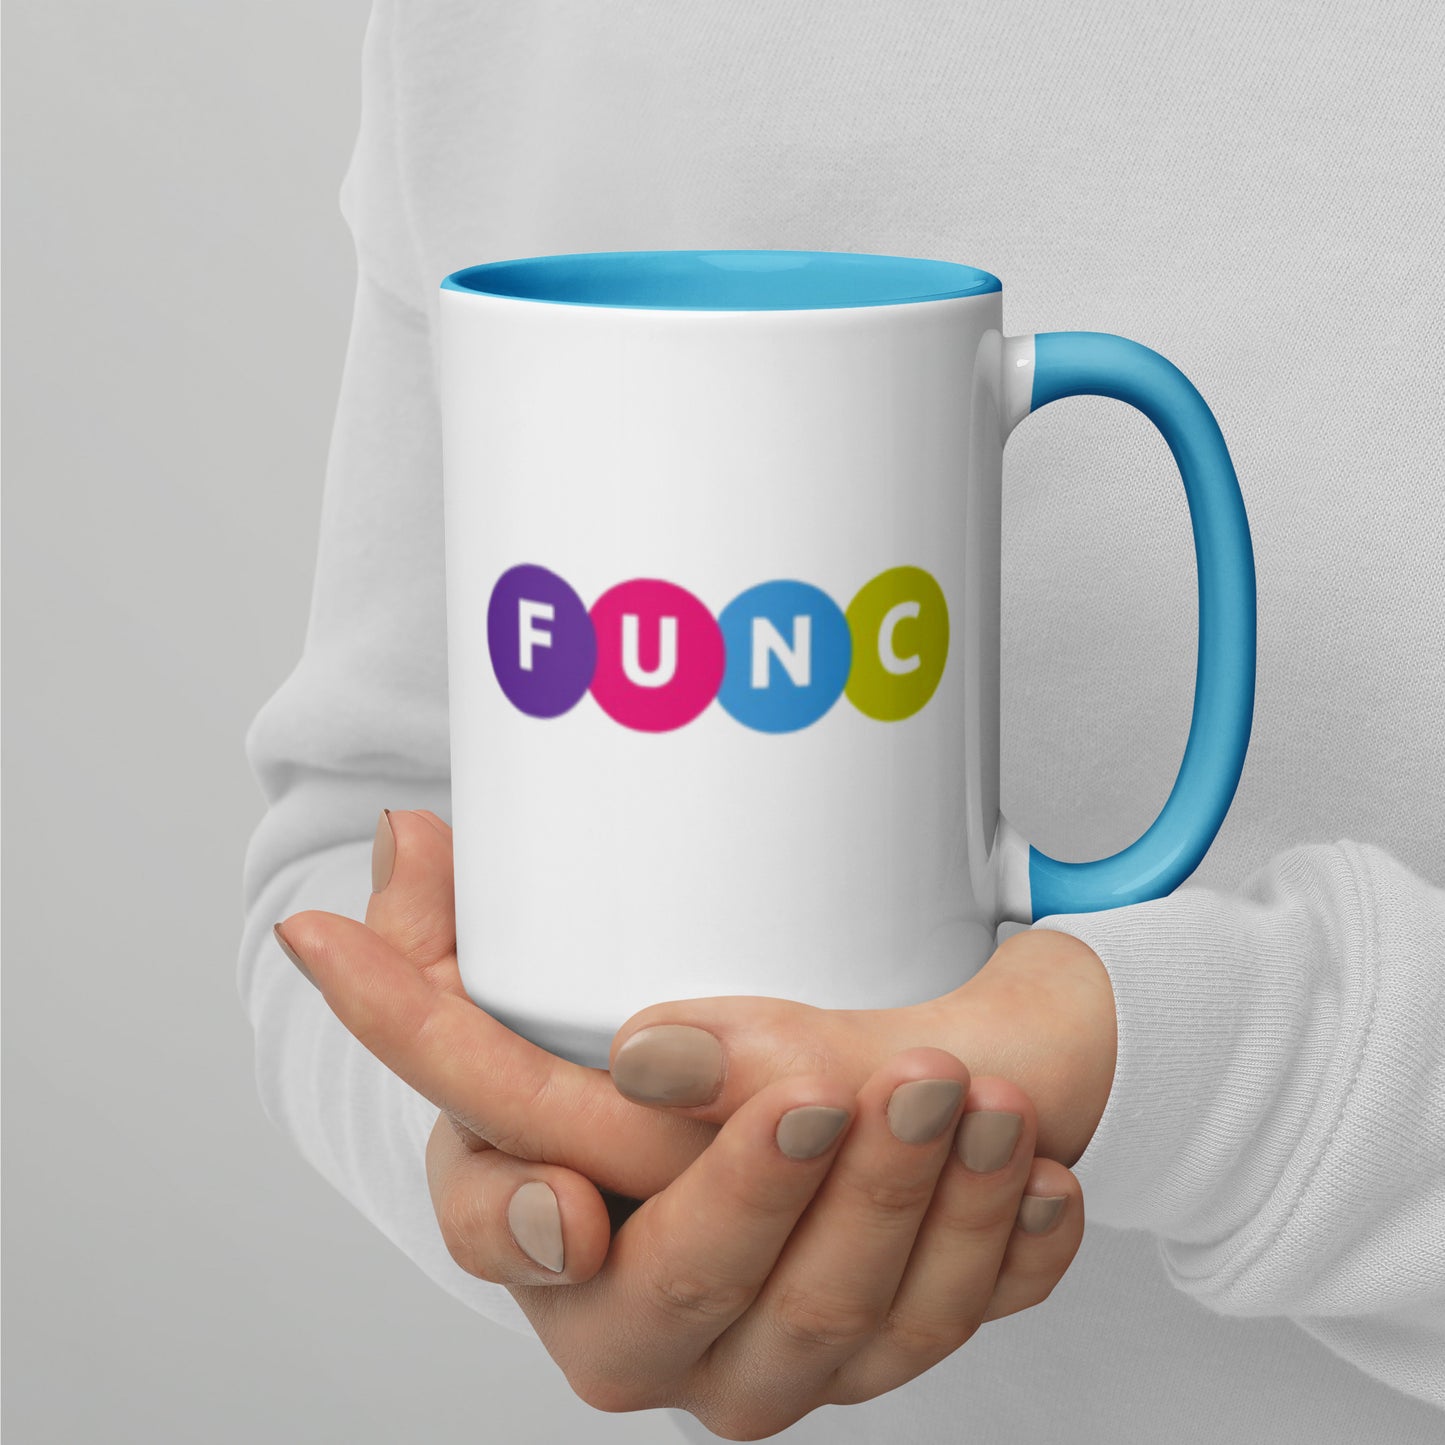 F.U.N.C. Mug With Color Inside